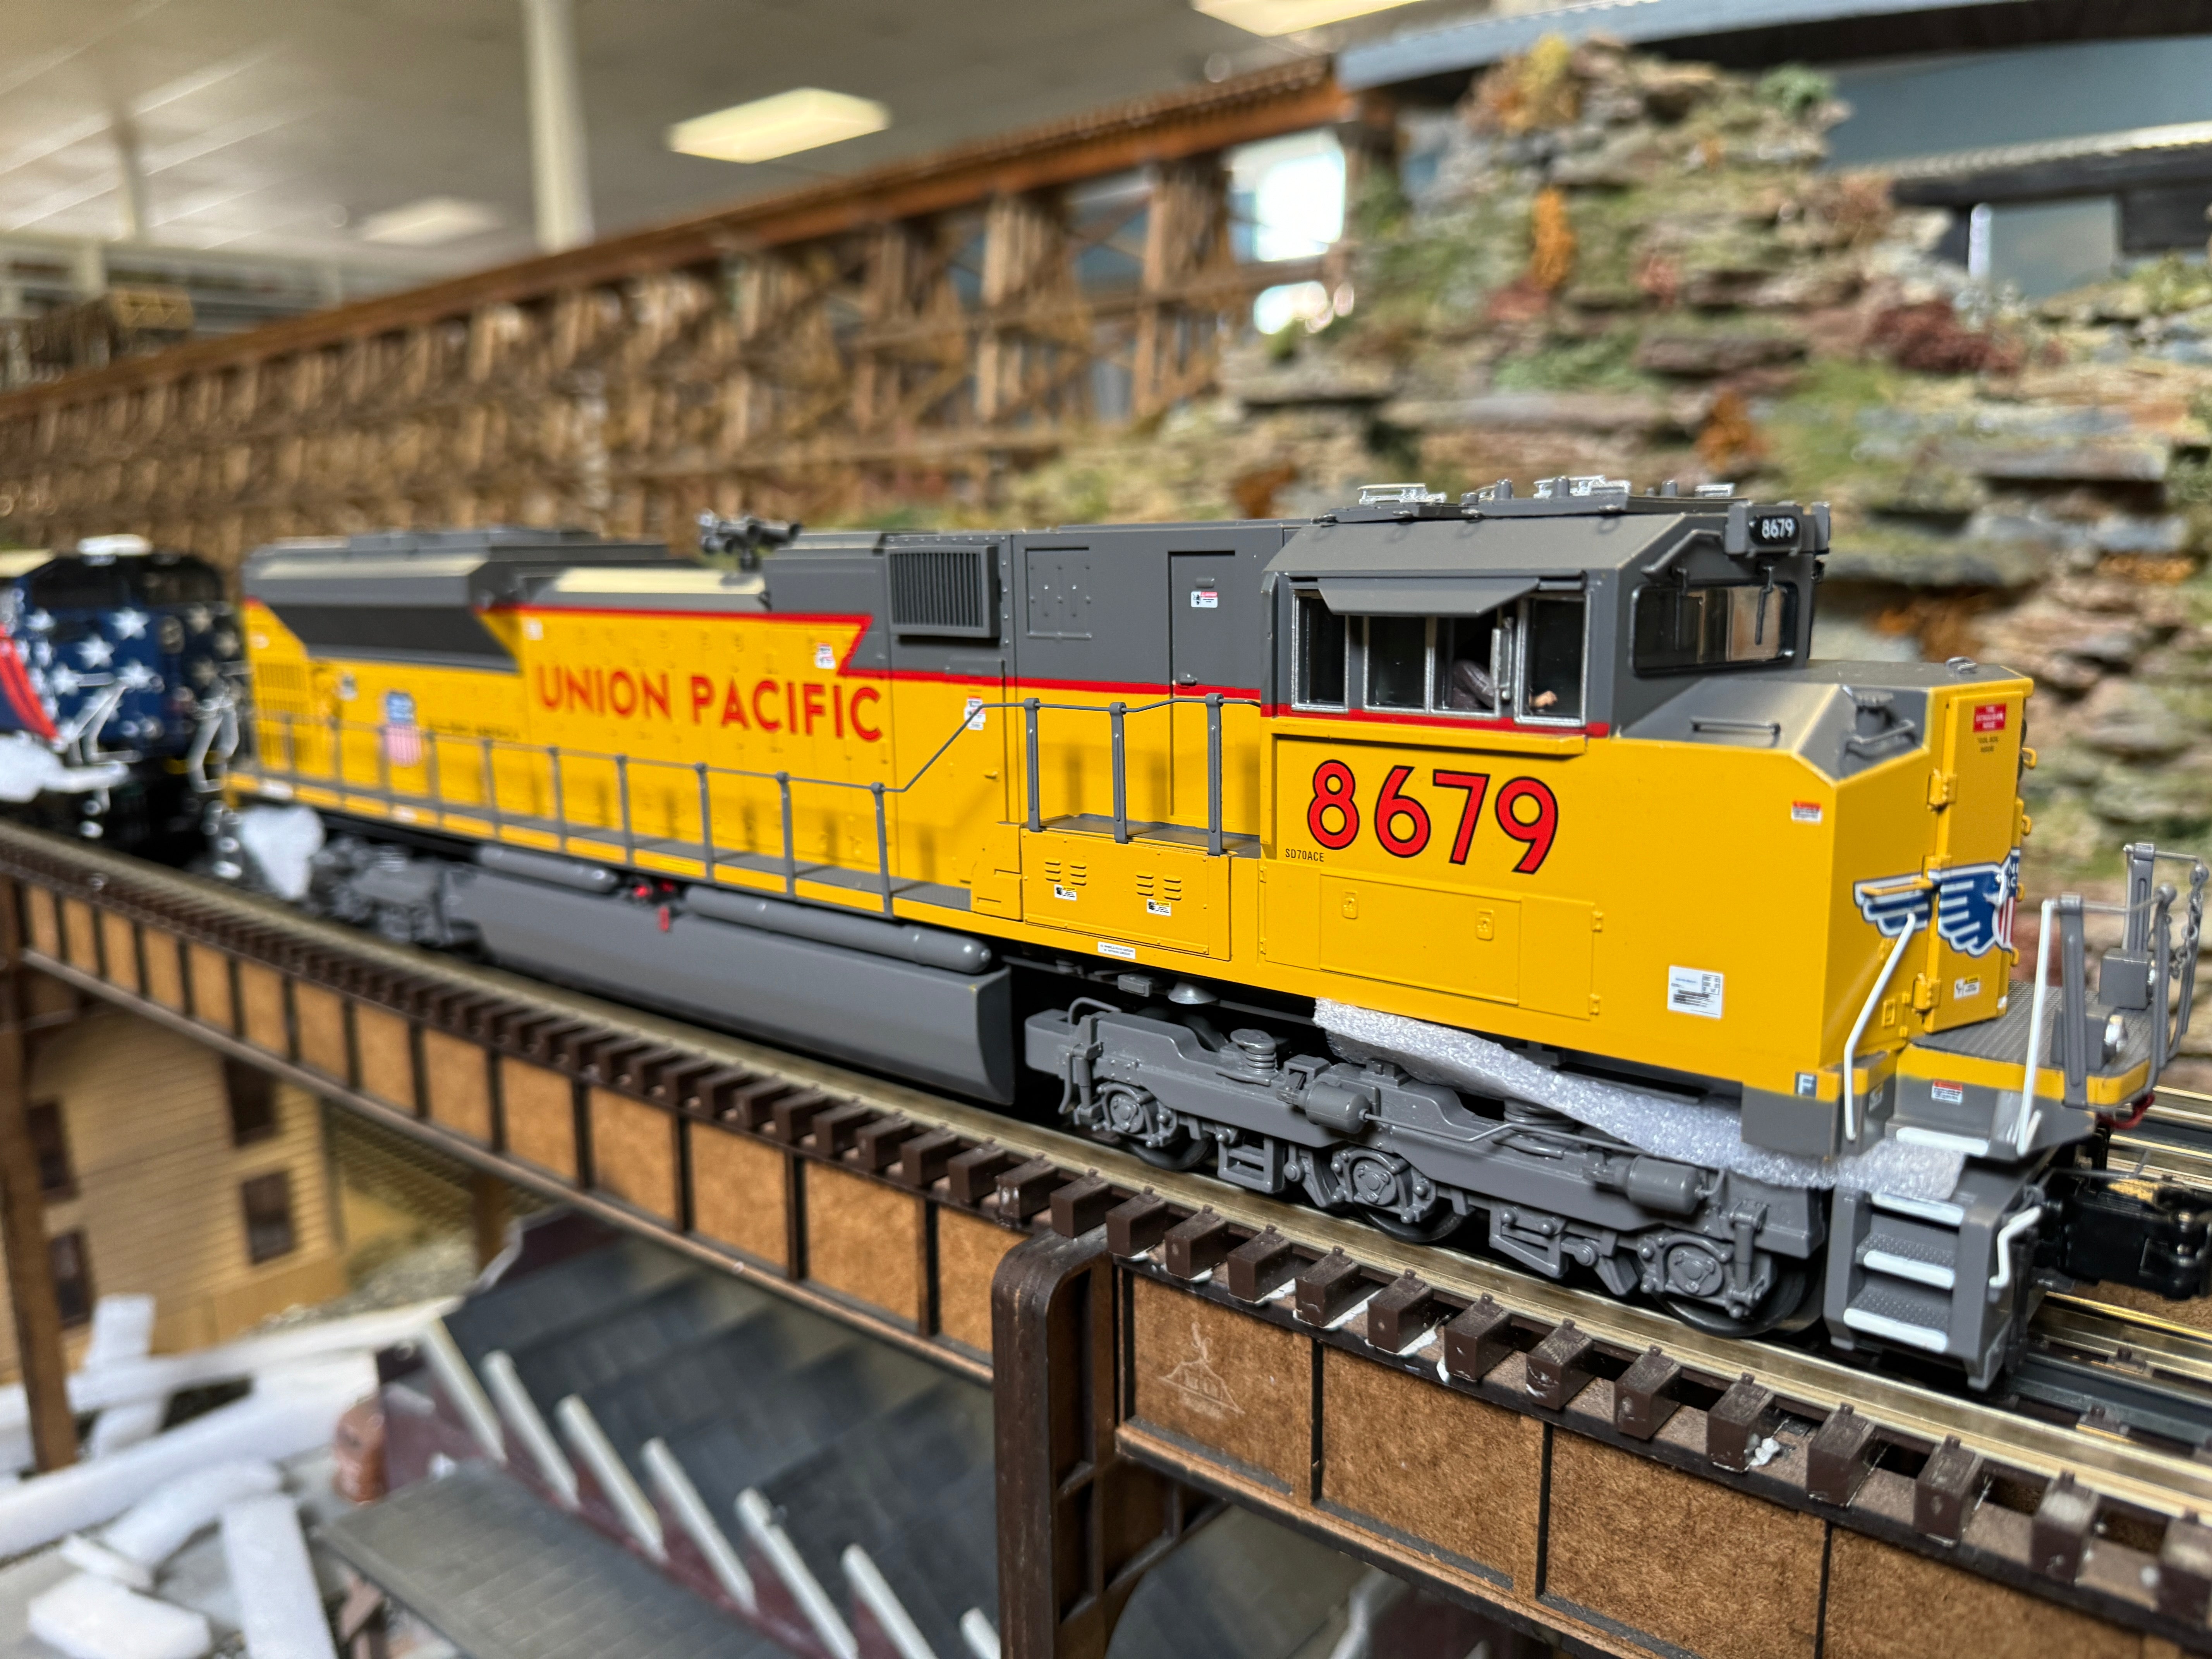 Atlas O 30138149 - Premier - SD70ACe Diesel Locomotive "Union Pacific" #8679 PTC w/ PS3 (No Flag)